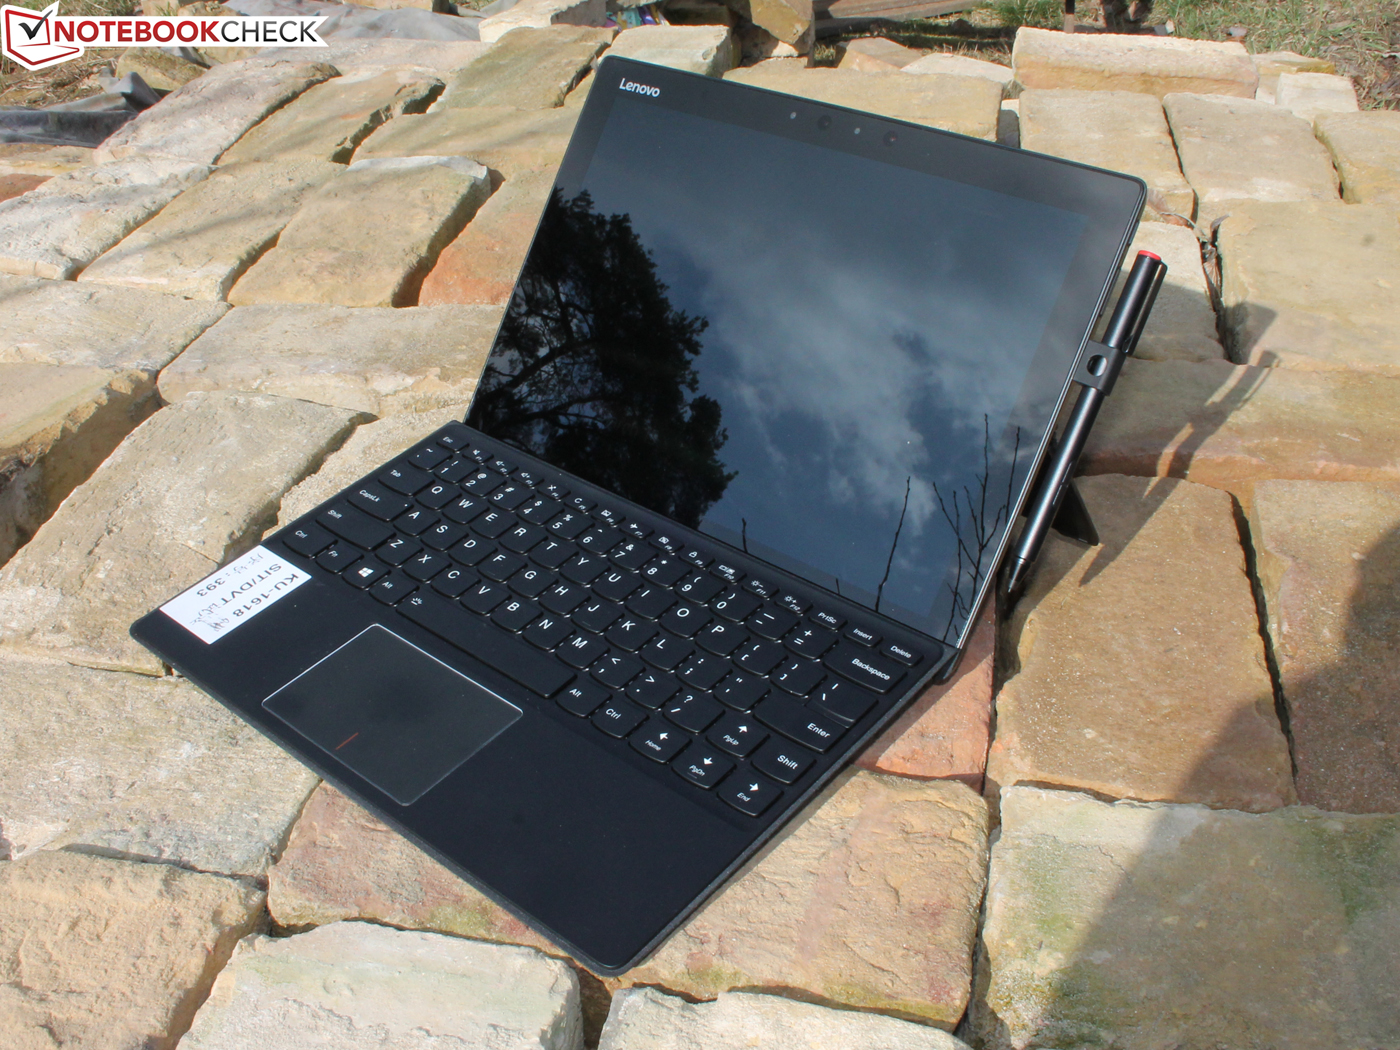 PC/タブレット ノートPC Lenovo IdeaPad Miix 720 (7500U, QHD) Convertible Laptop Review 